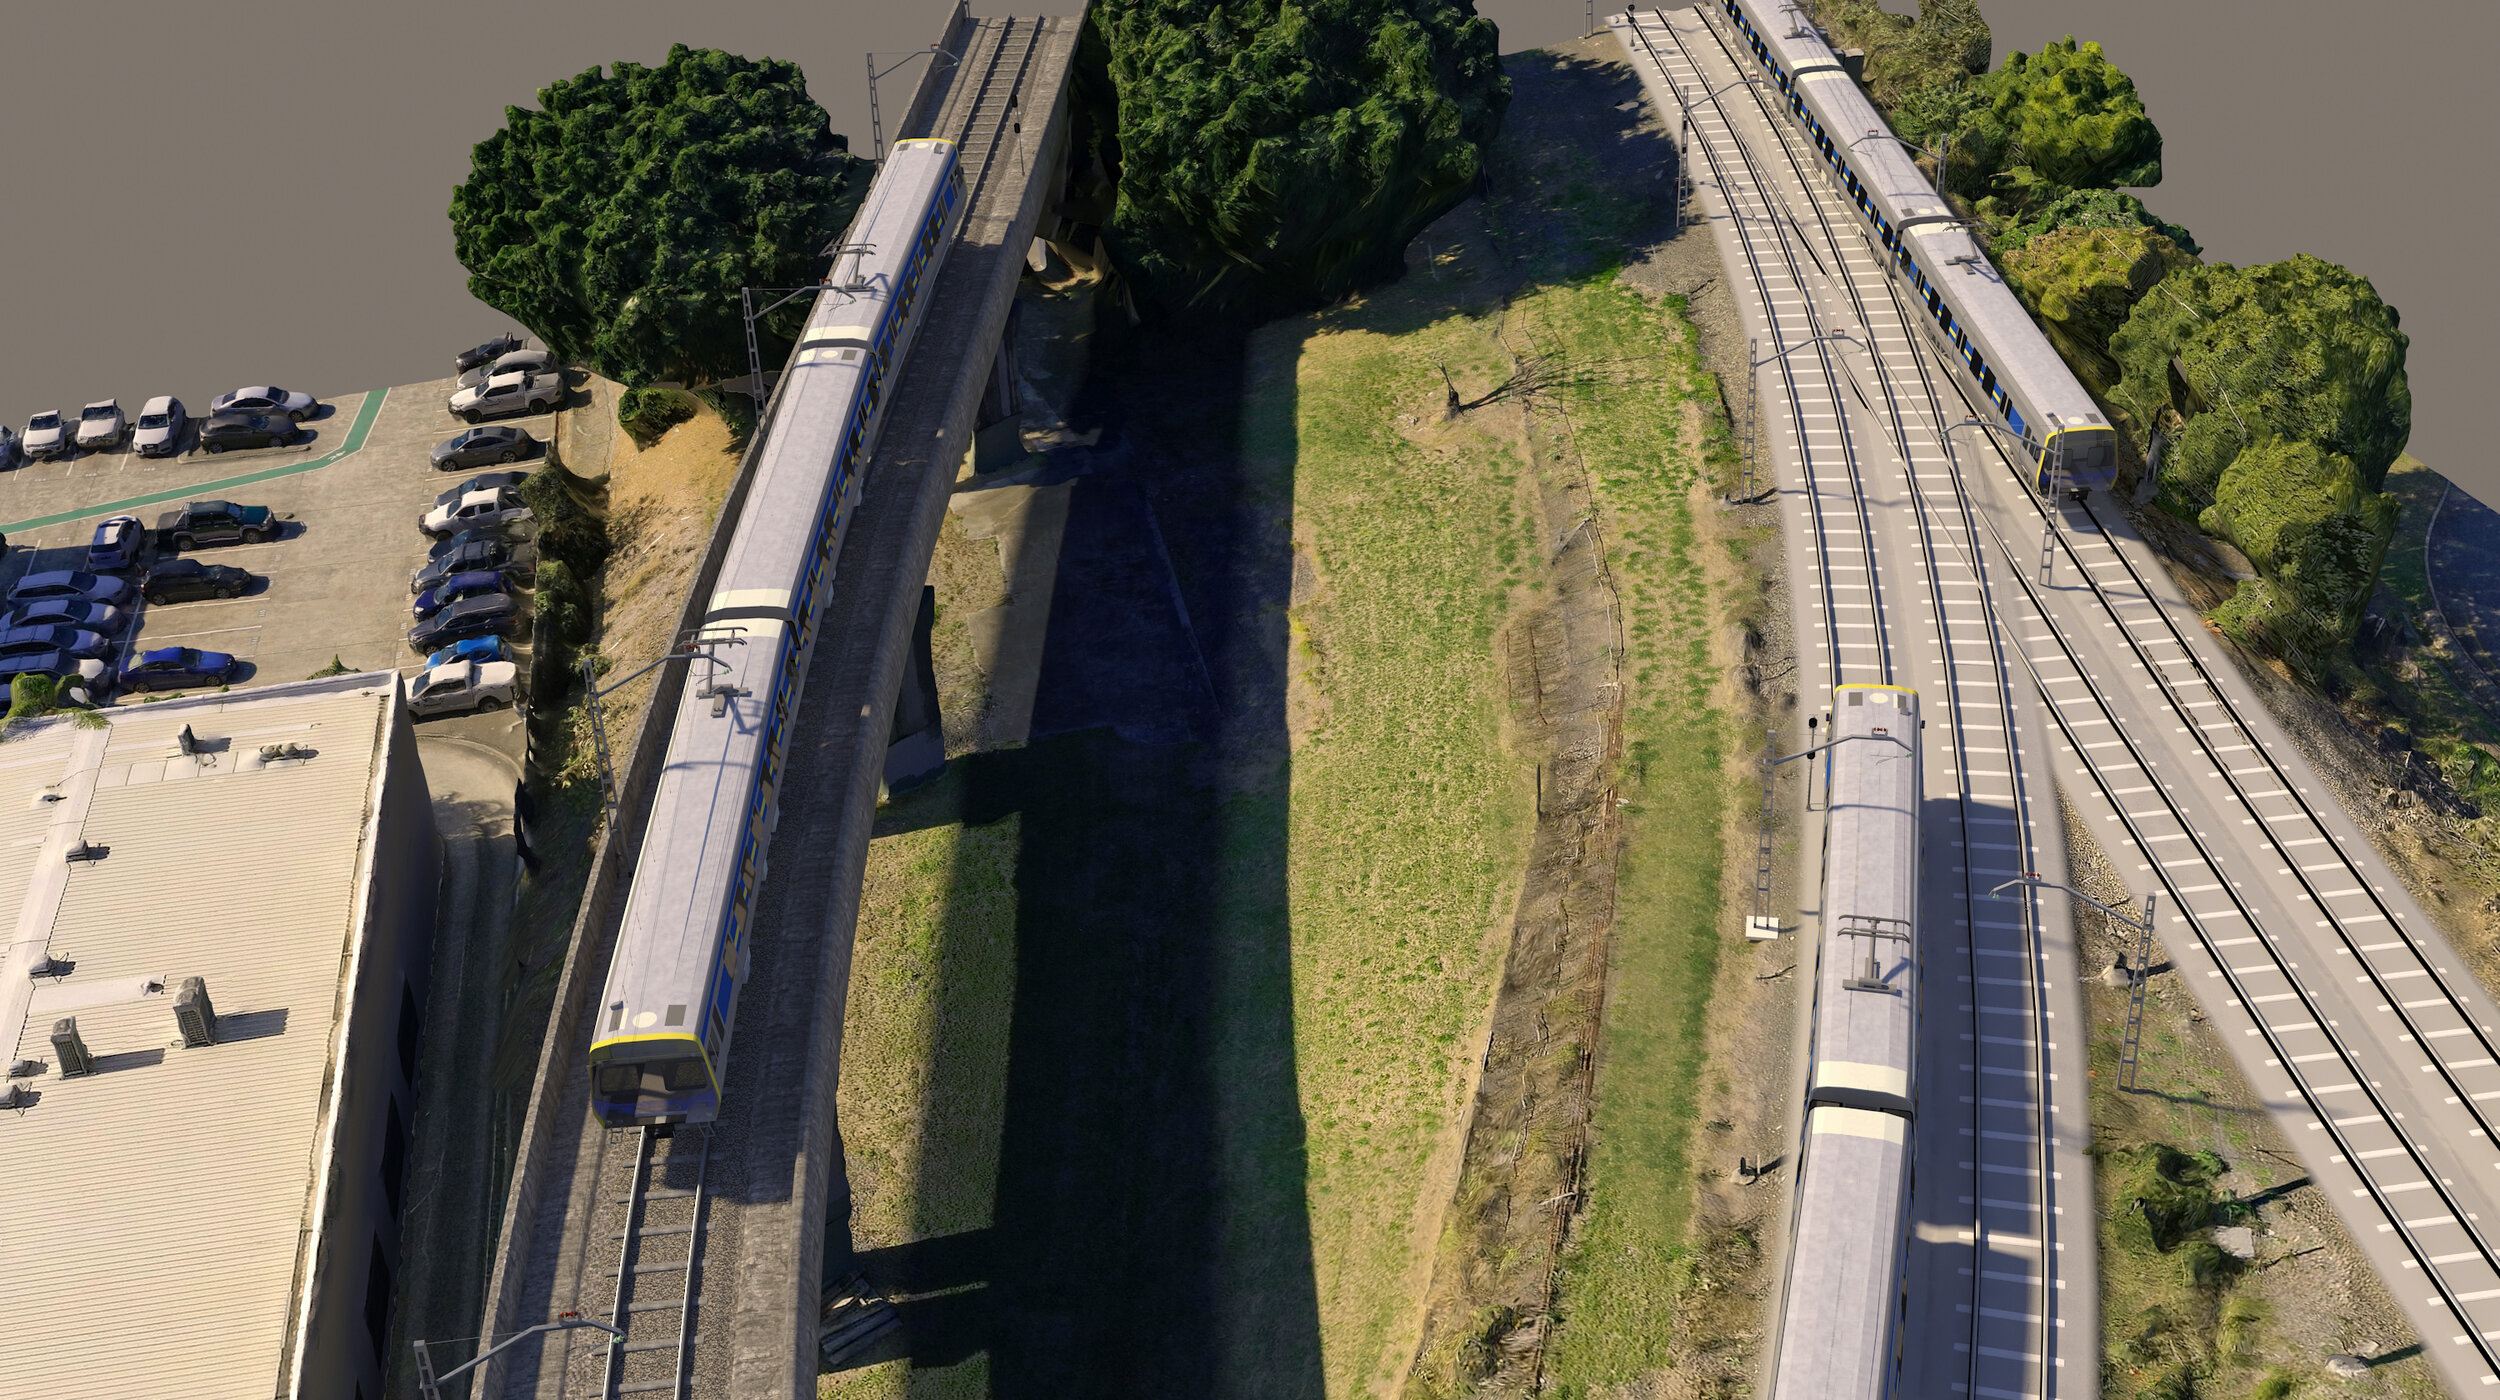 REPLACED TRAIN TRACKS + BRIDGE